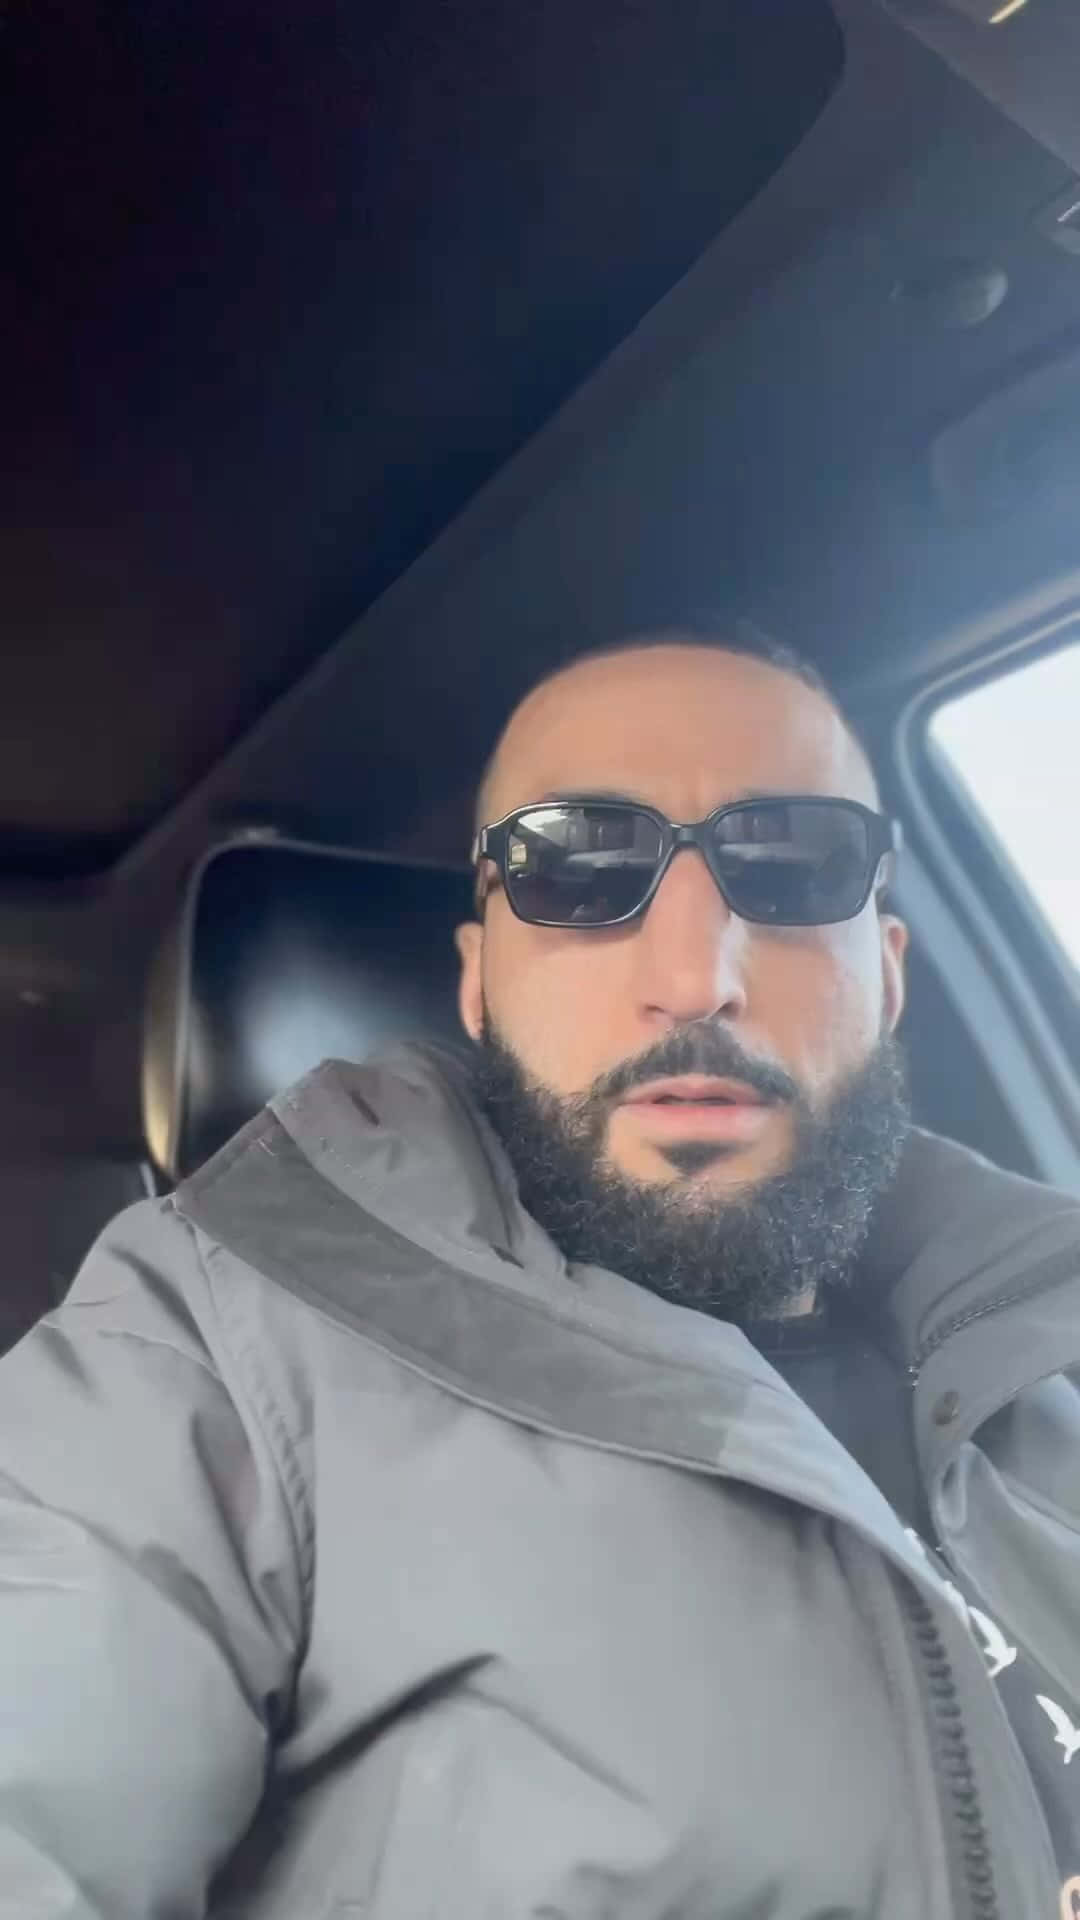 Belal Muhammad Wearing Sunglasses In The Car Wallpaper